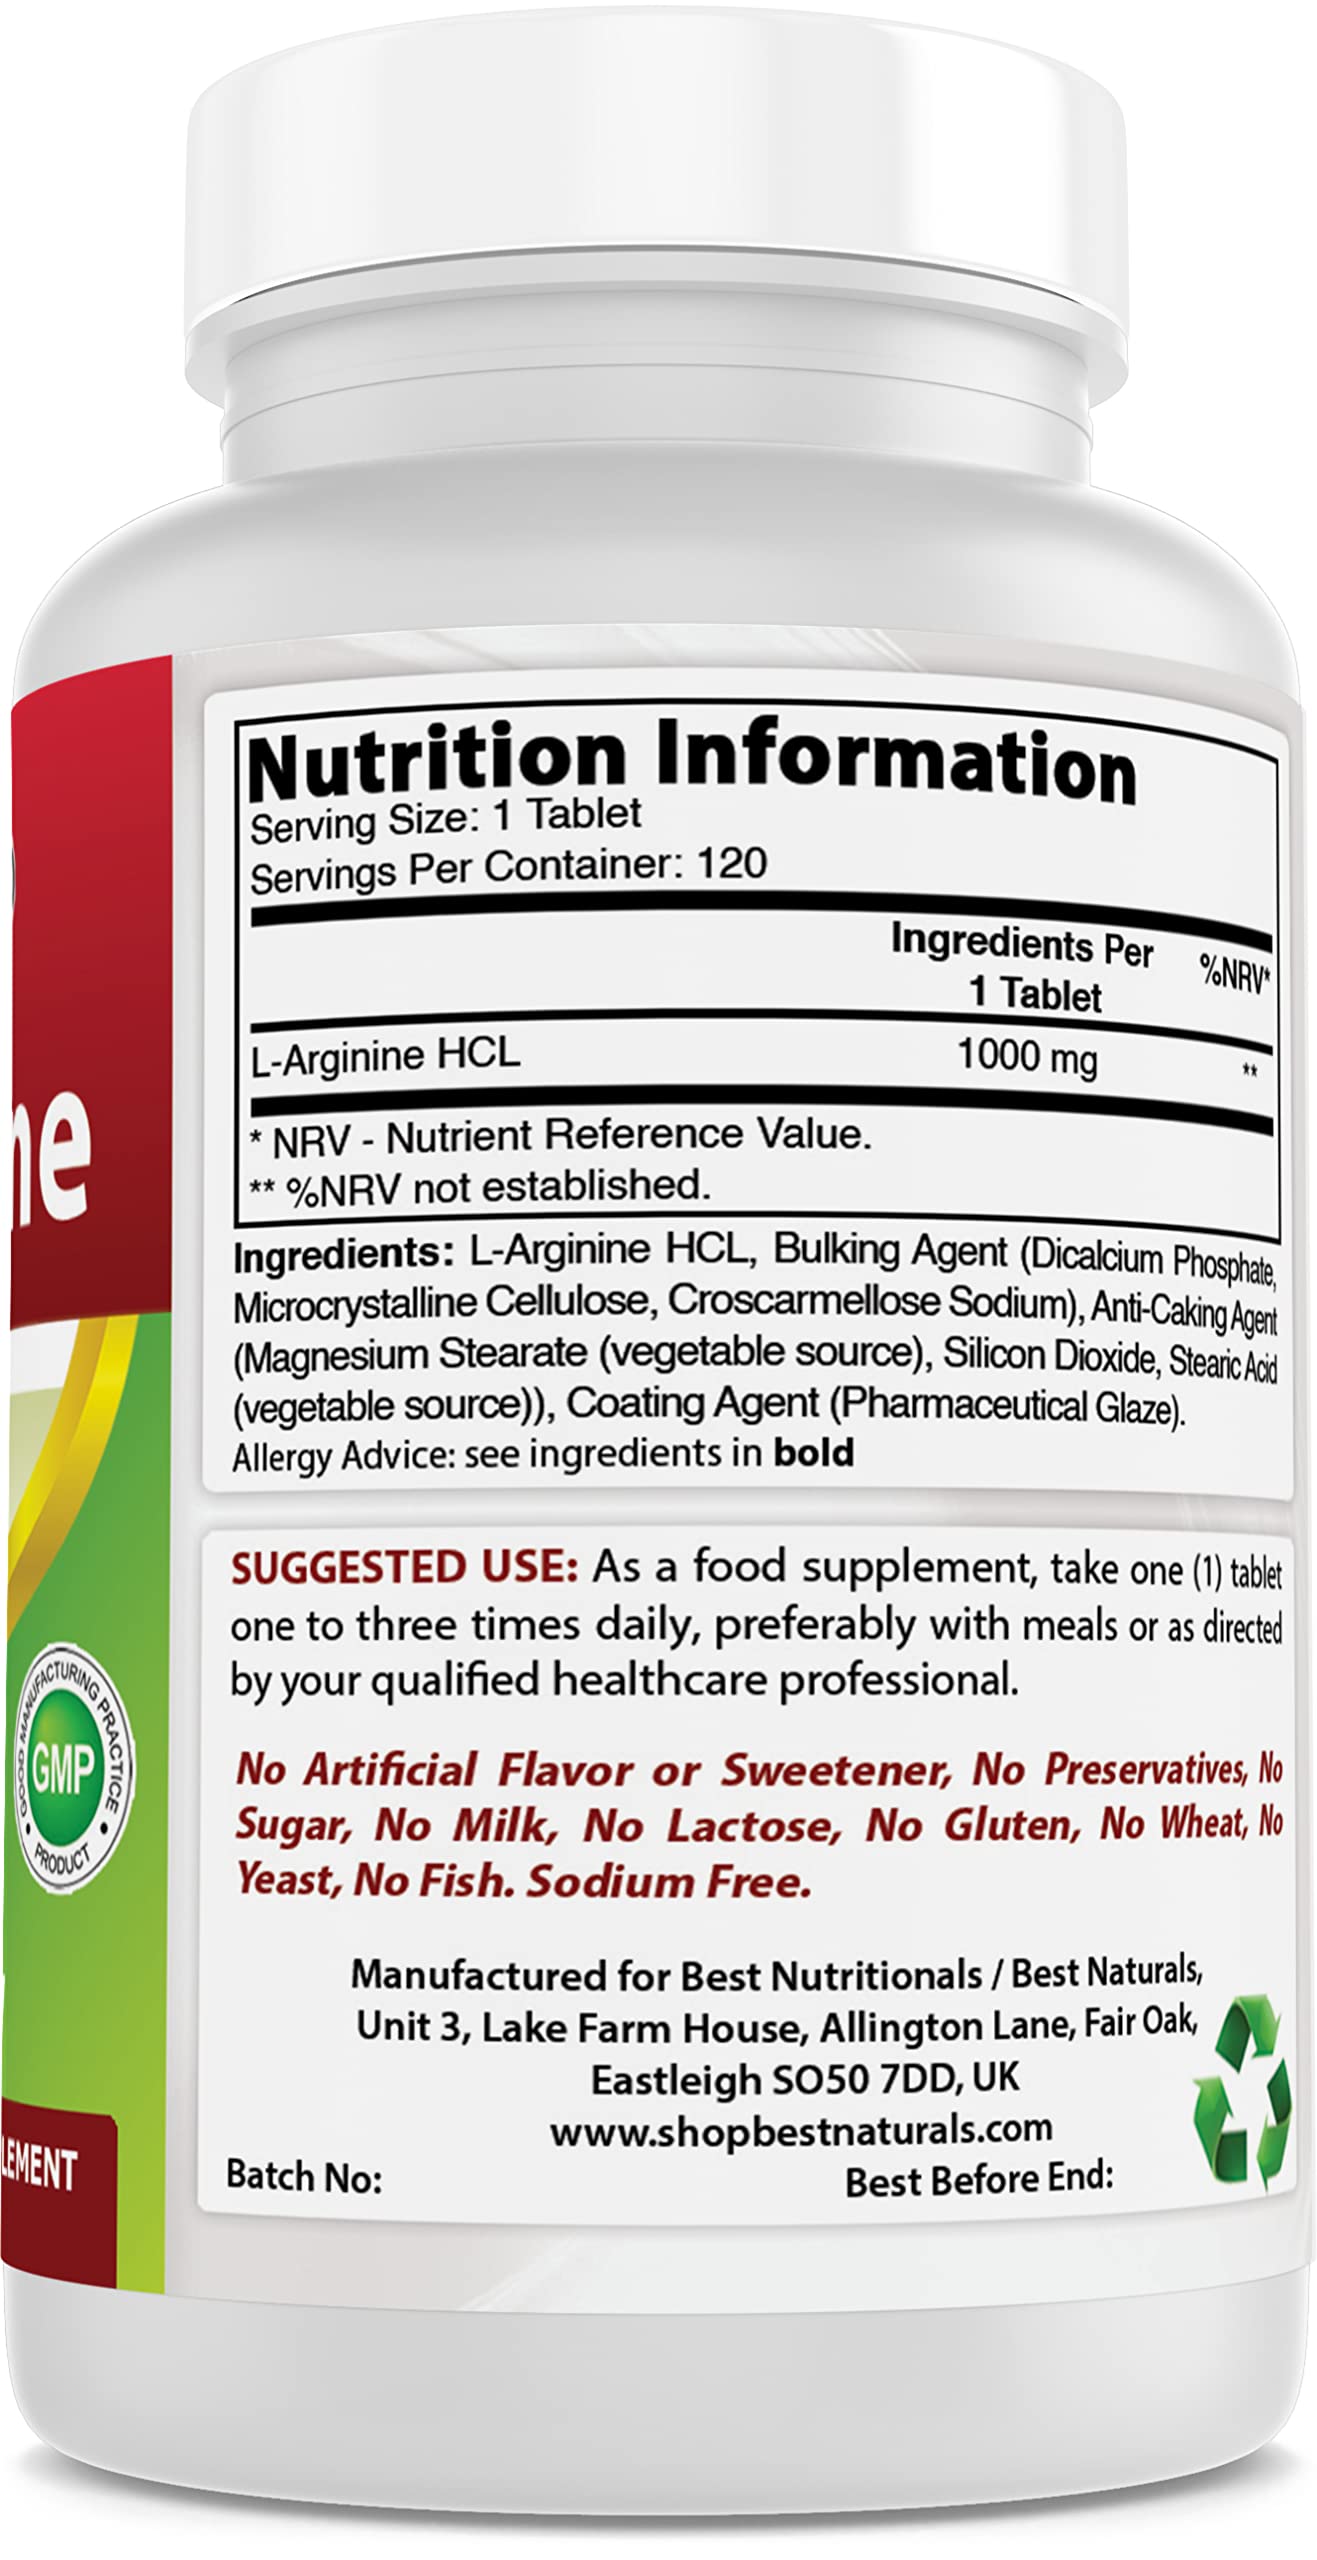 Best Naturals 3 Pack L-Arginine 1000 mg 120 Tablets - Pharmaceutical Grade L Arginine Supplement Promotes Nitric Oxide Synthesis (Total 360 Tablets)